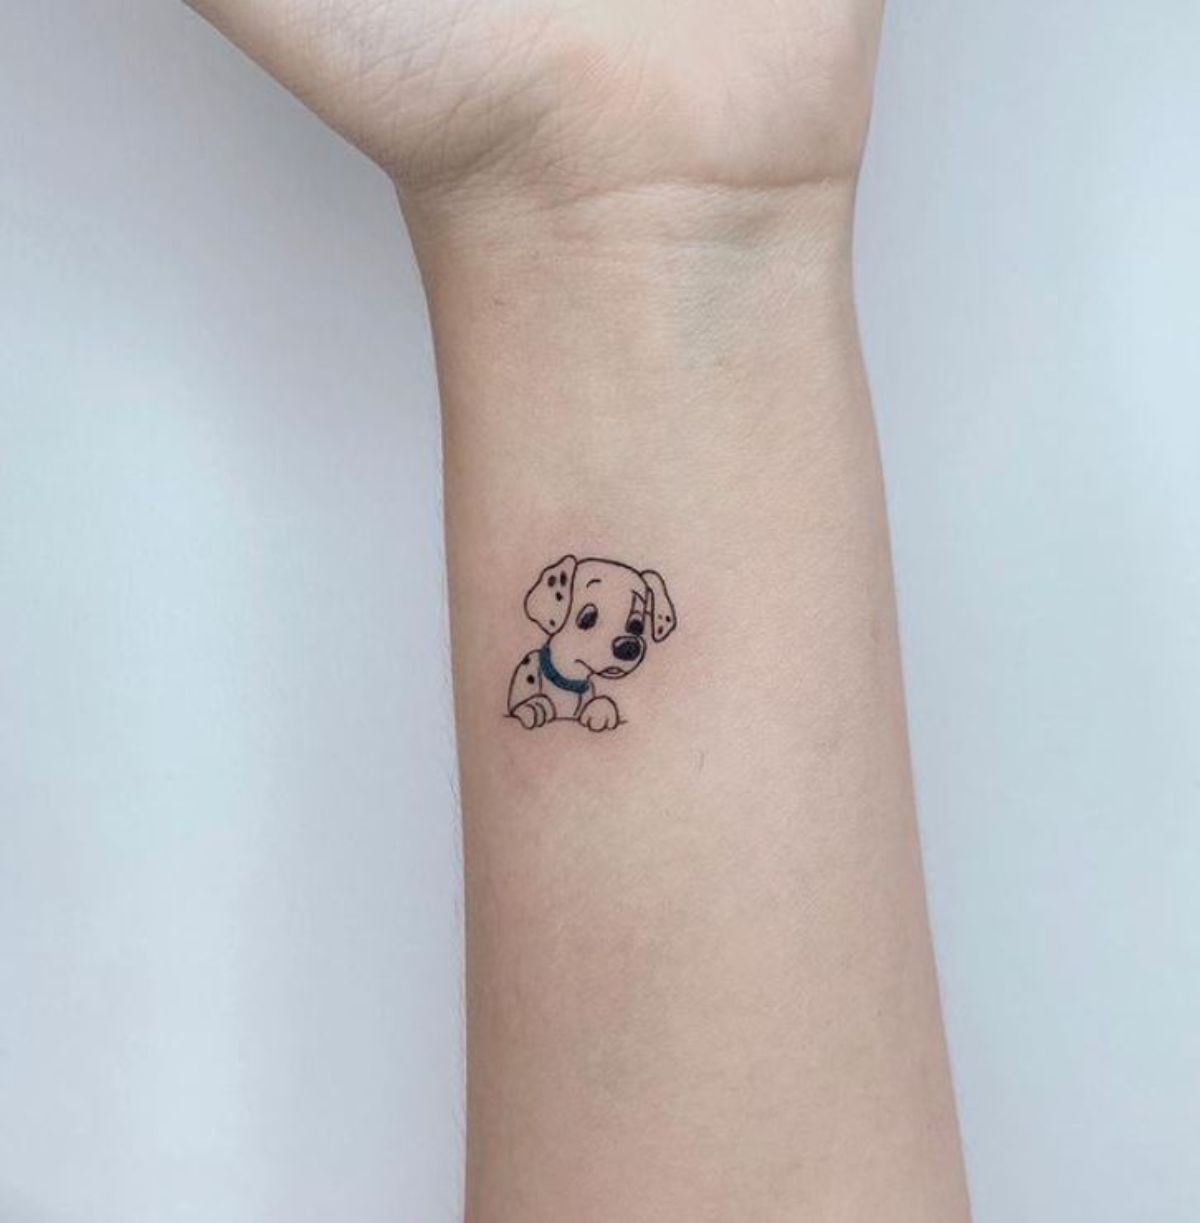 dalmatian puppy cartoon character tattoo on the wrist